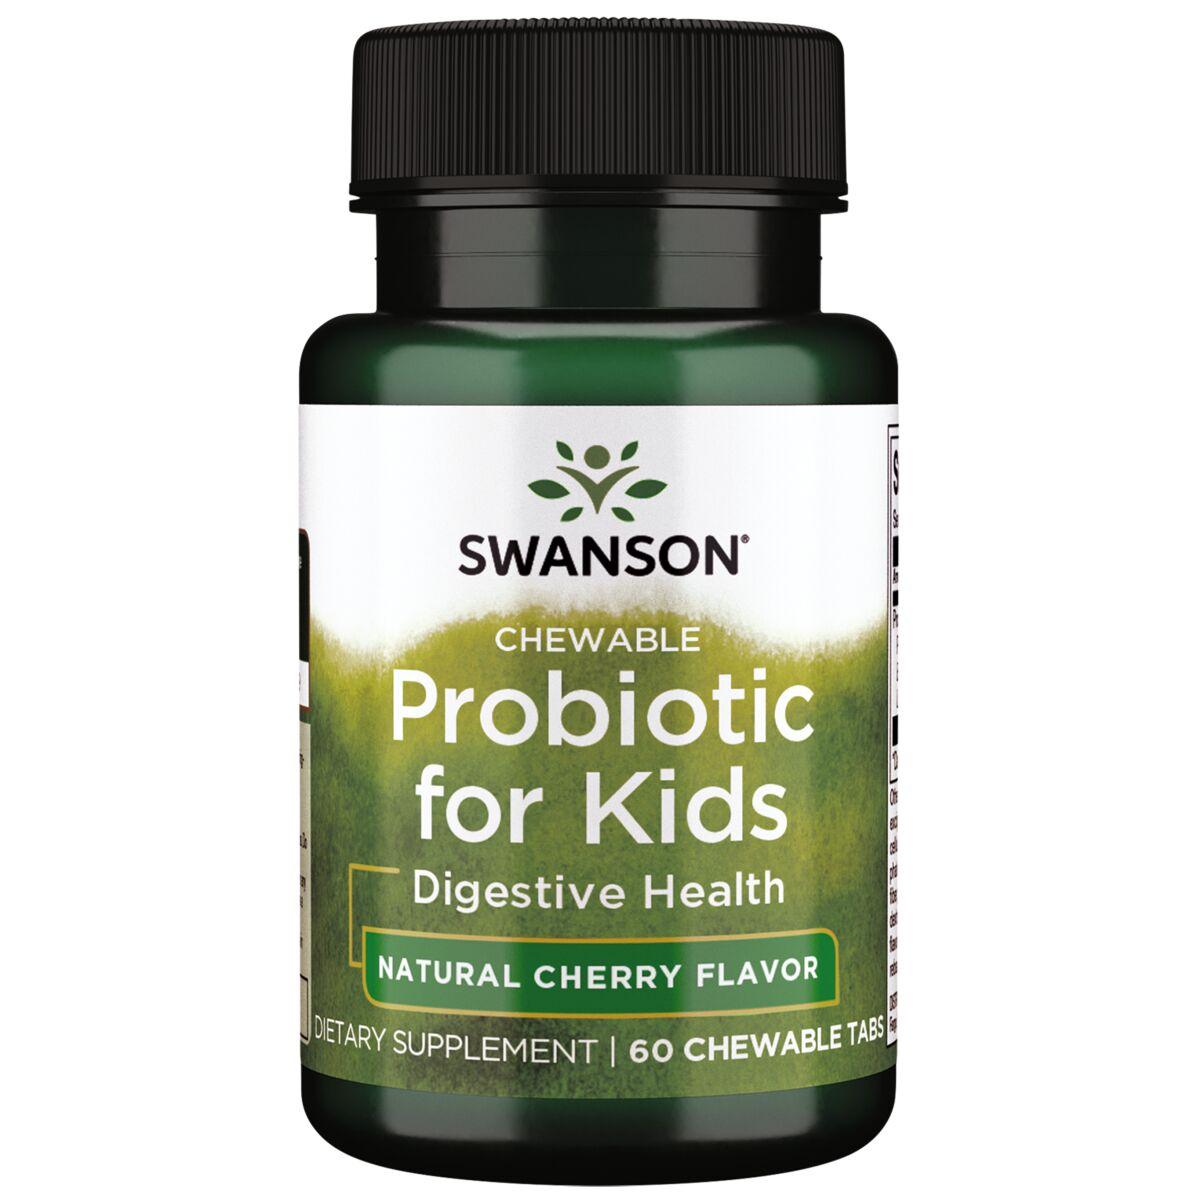 Swanson Probiotics Chewable Probiotic for Kids - Natural Cherry Flavor Supplement Vitamin 3 Billion CFU 60 Chewables